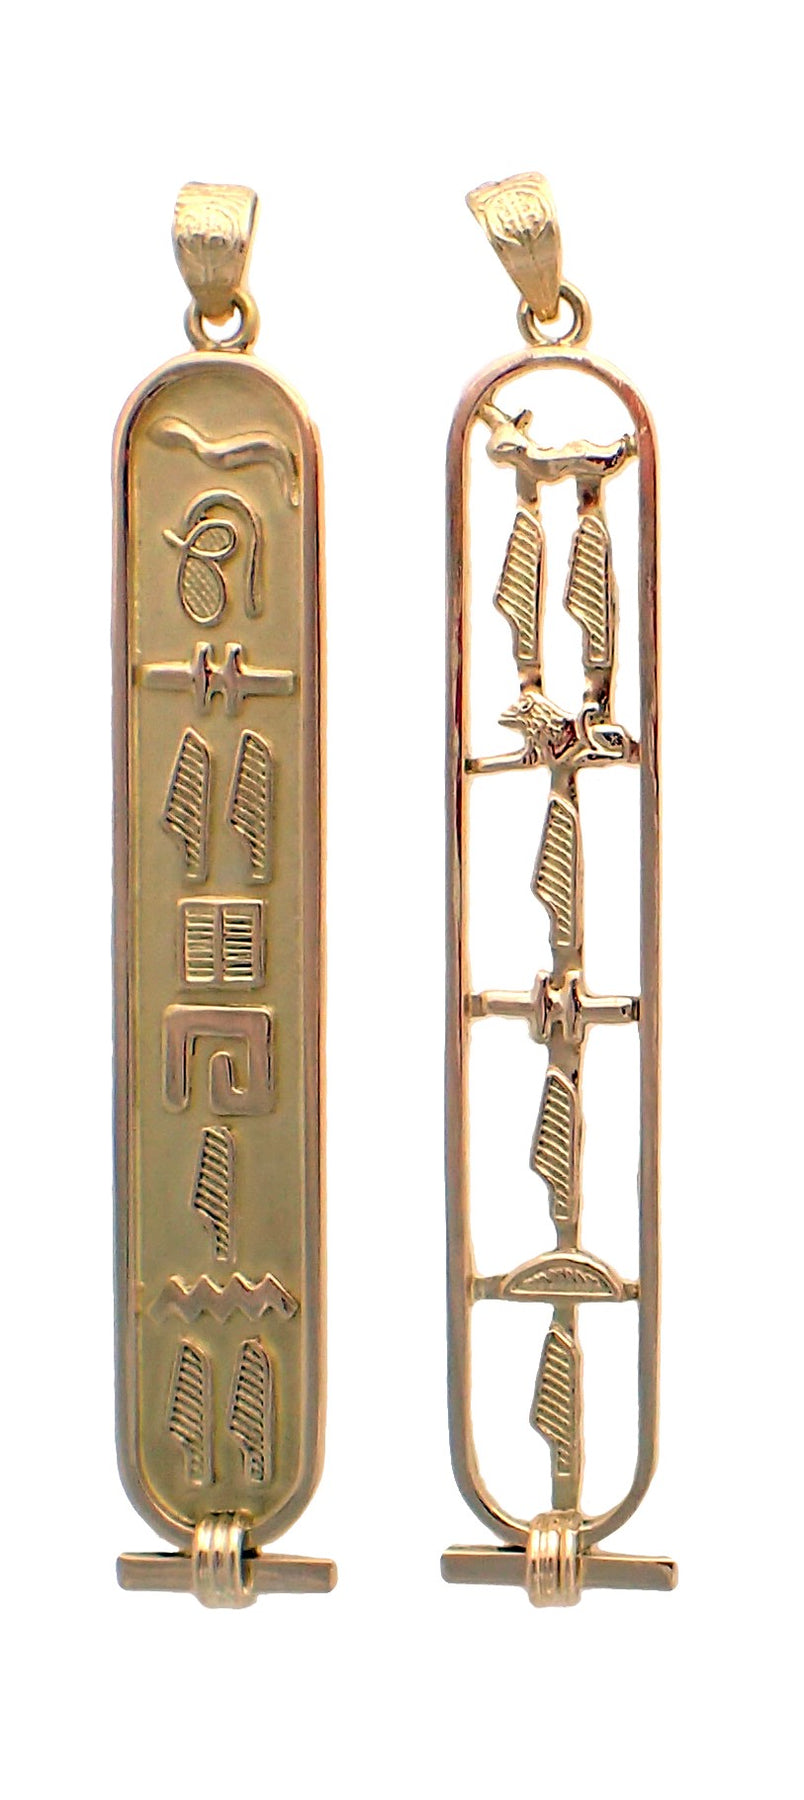 Cartouche Jewelry Pendant - Egypt Museum